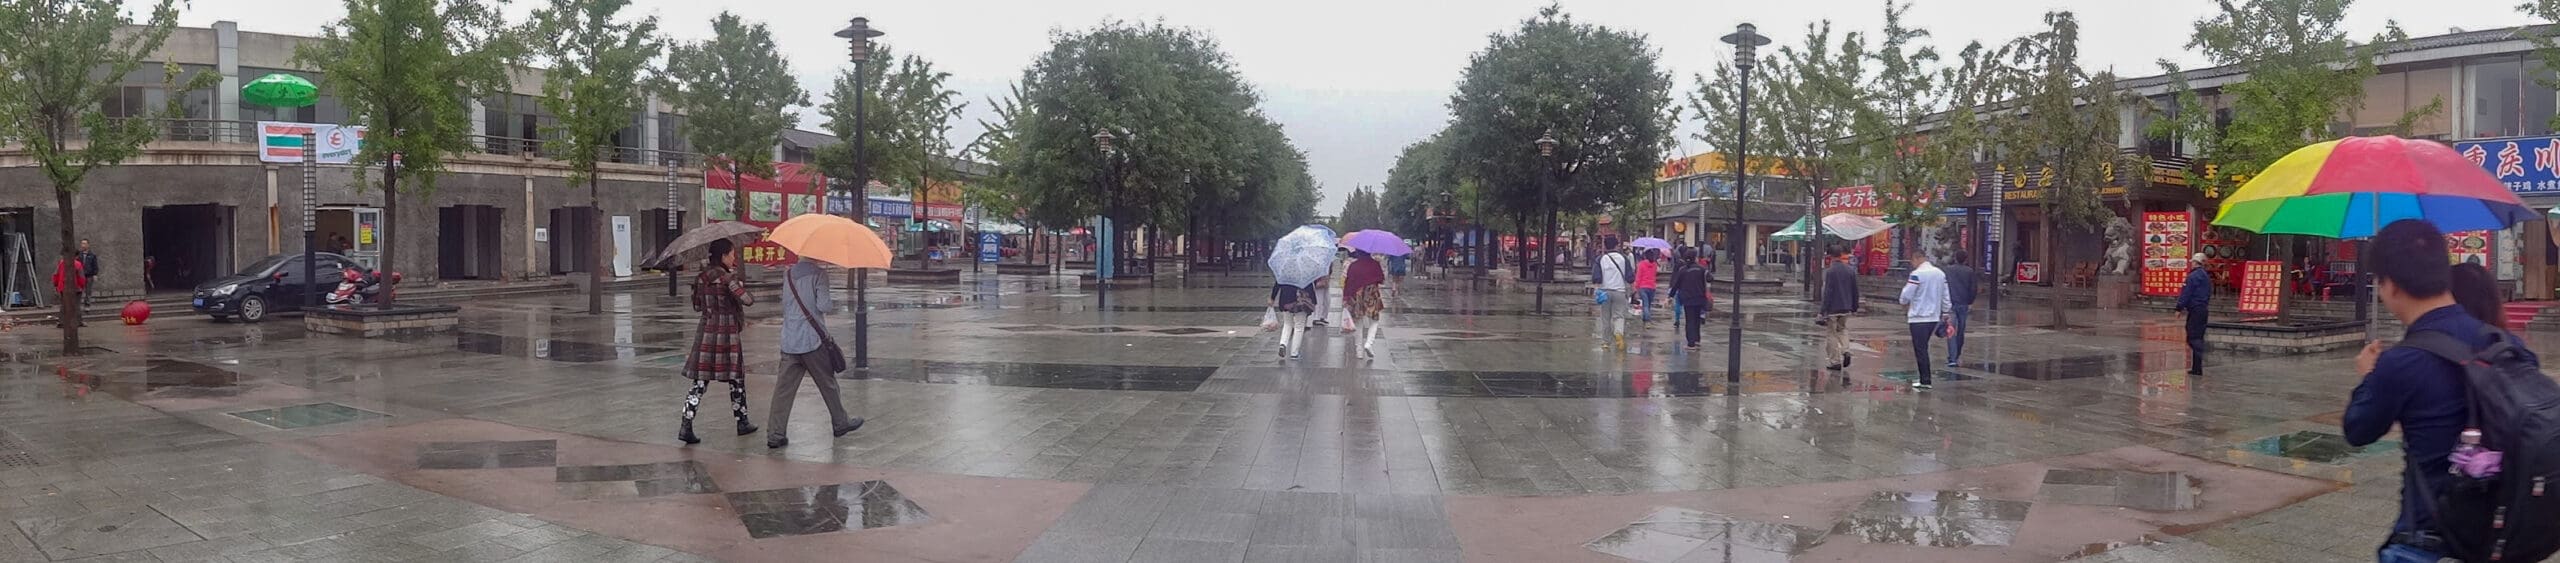 Tourists with umbrellas walk around Emperor Qinshihuang's Mausoleum complex, Xian, China